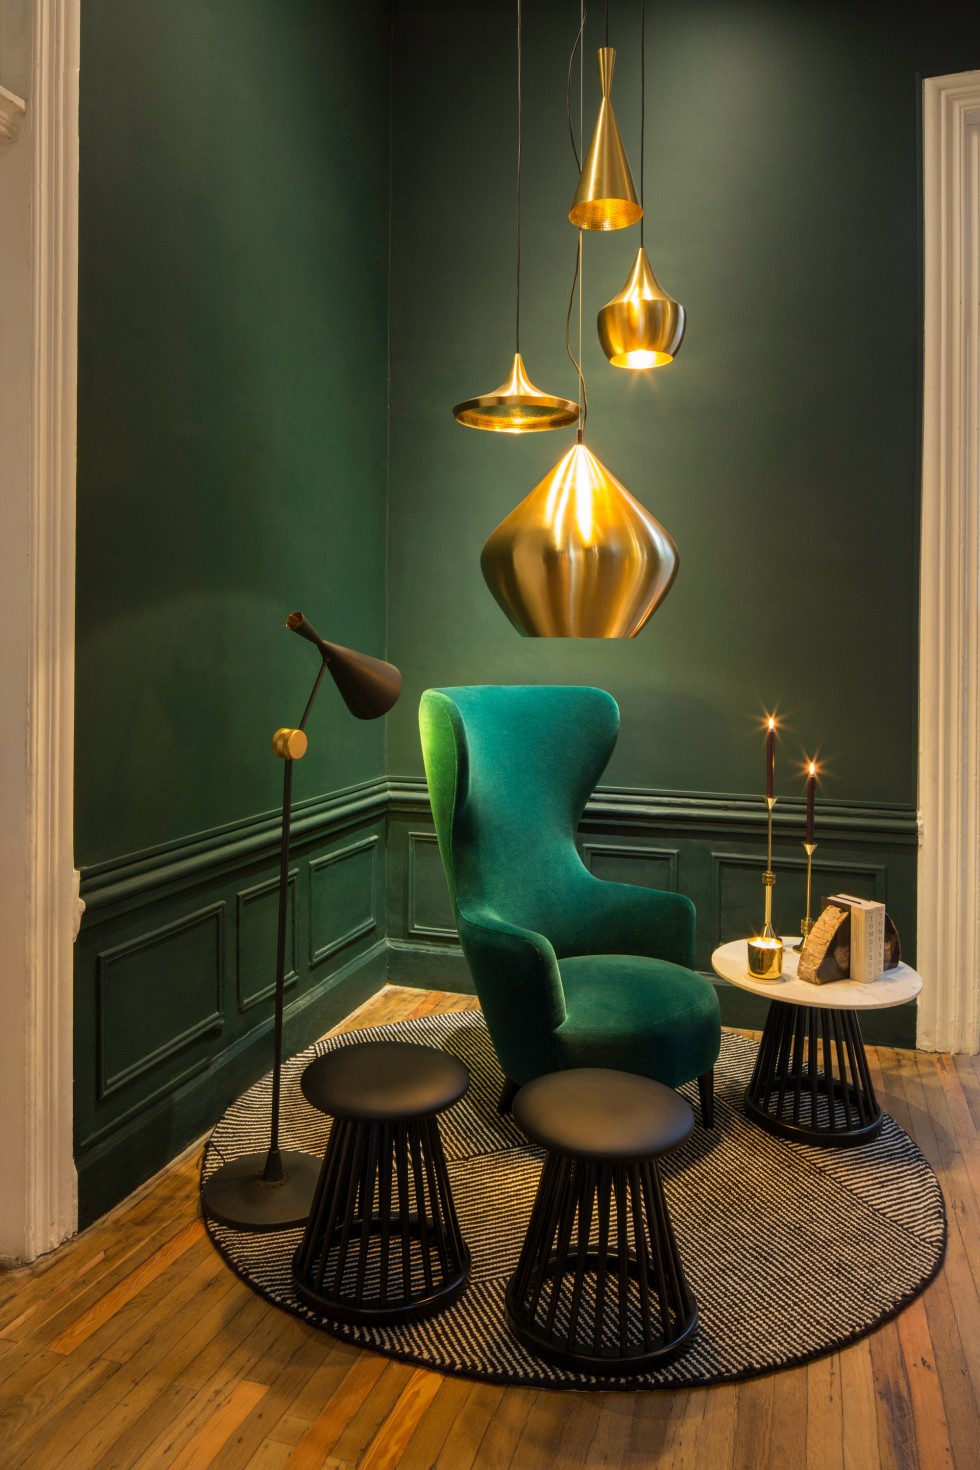 Luxury Rooms with lighting Golden Details living room